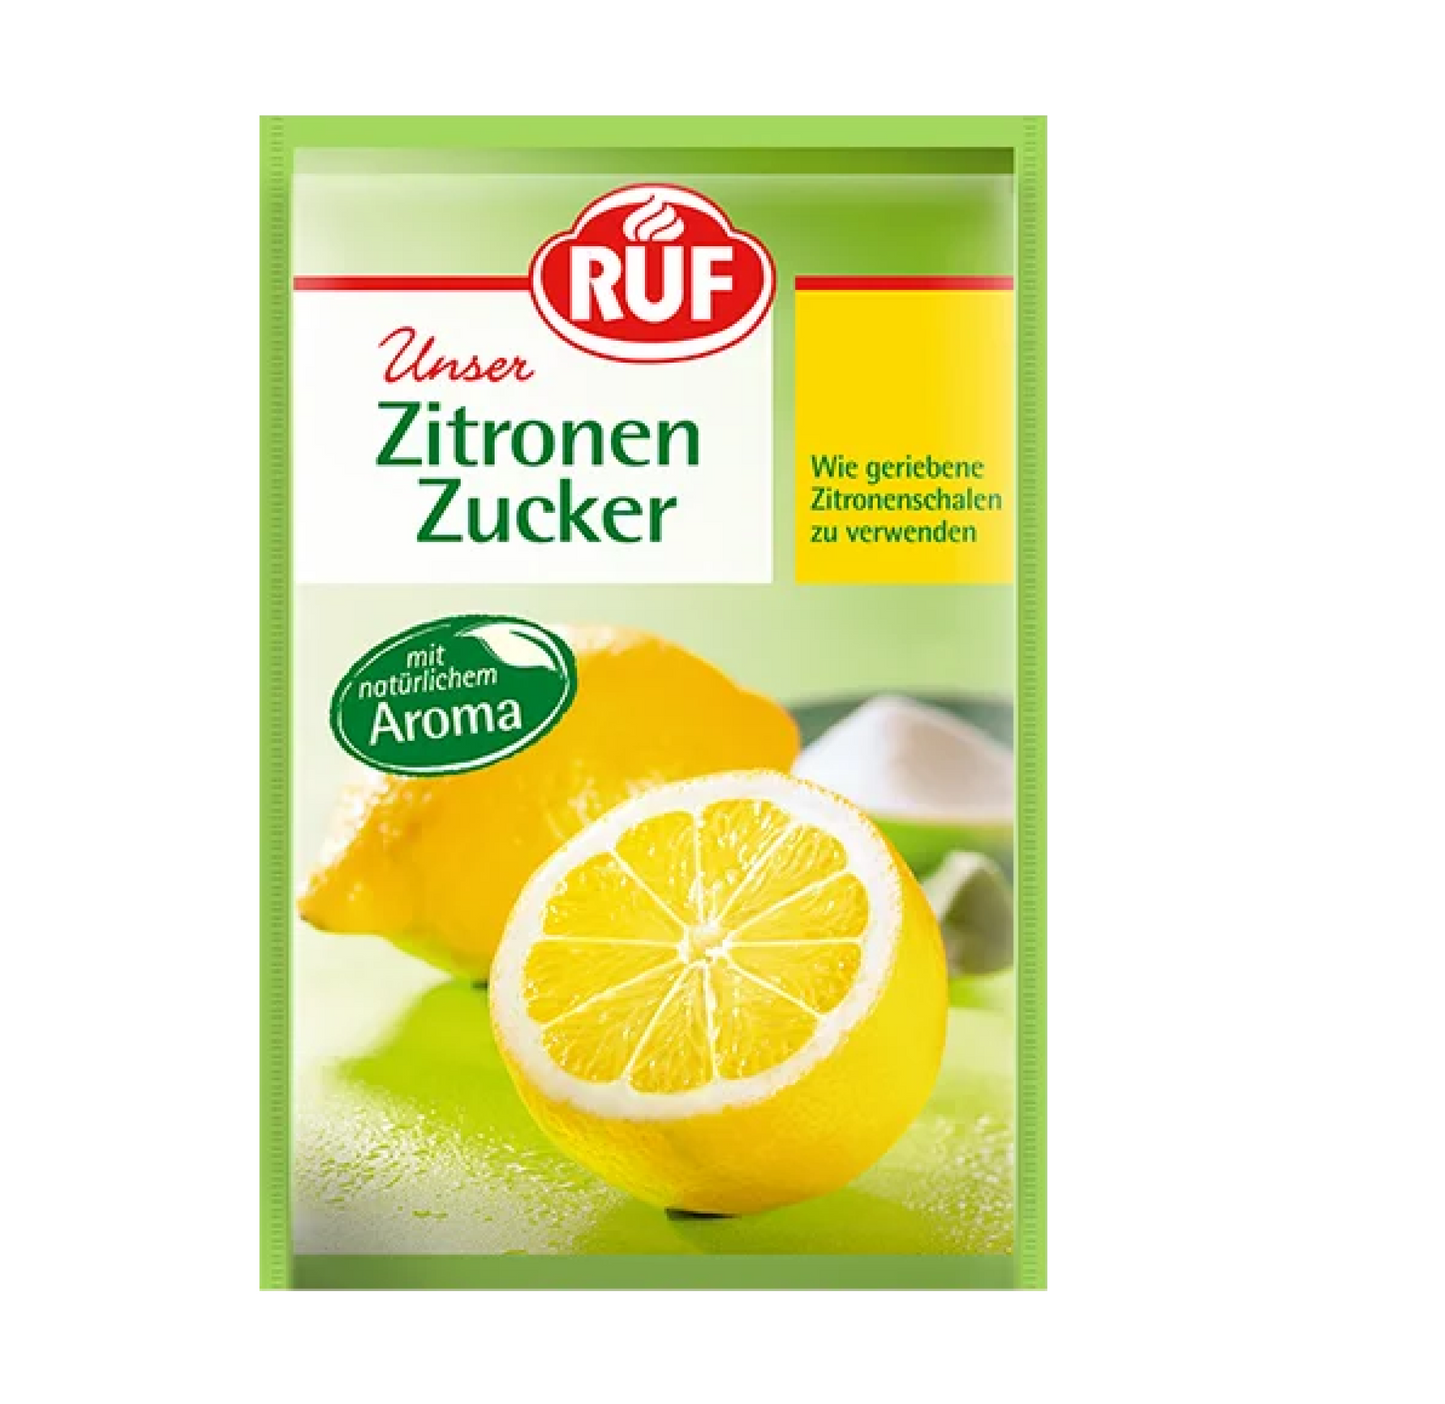 RUF Zitronen Zucker 10g x 3